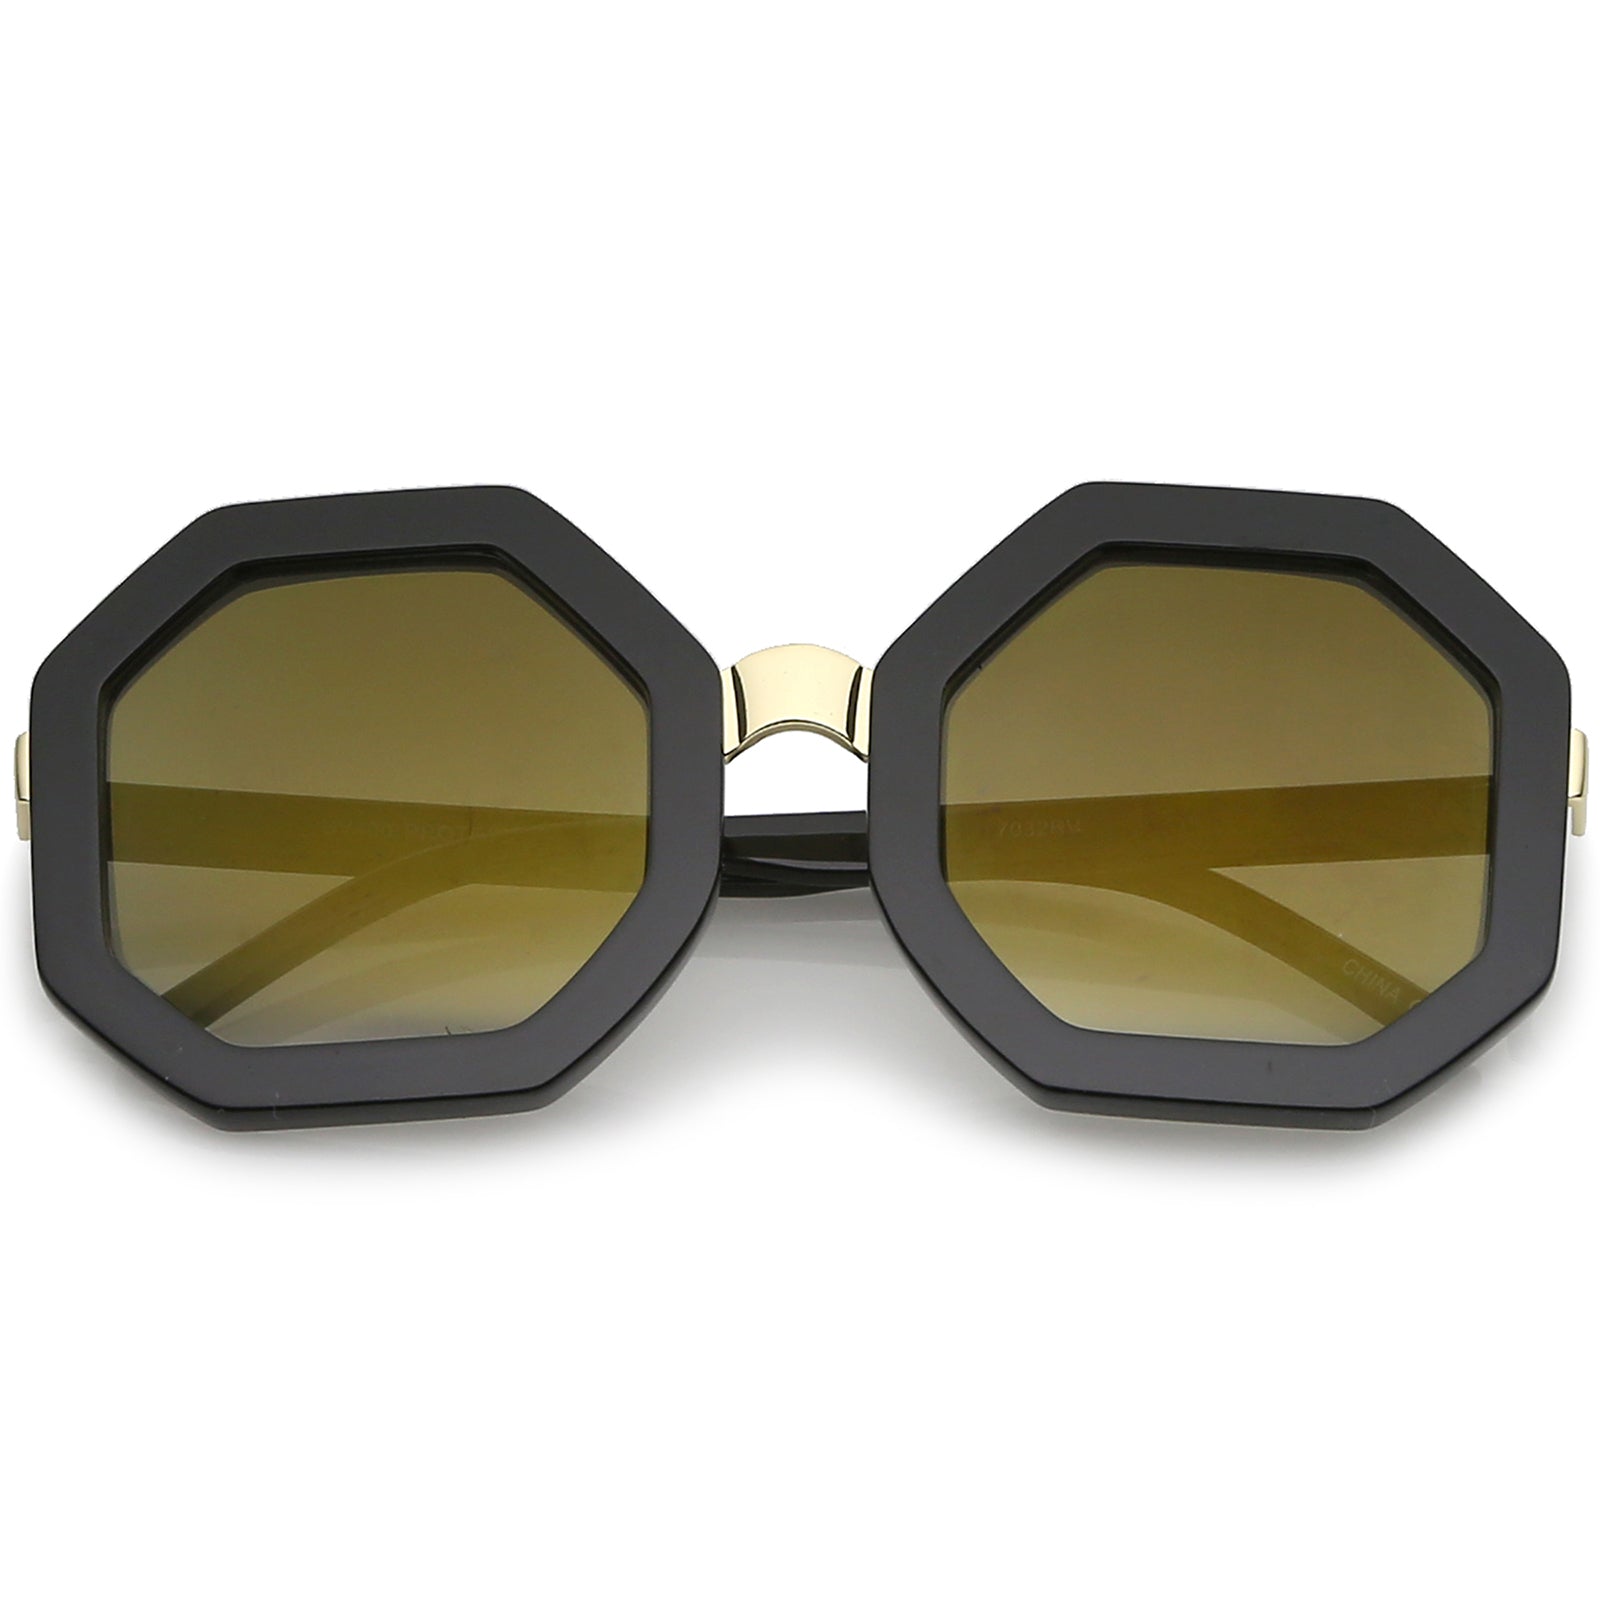 Black Gold Hexagonal Sunglasses